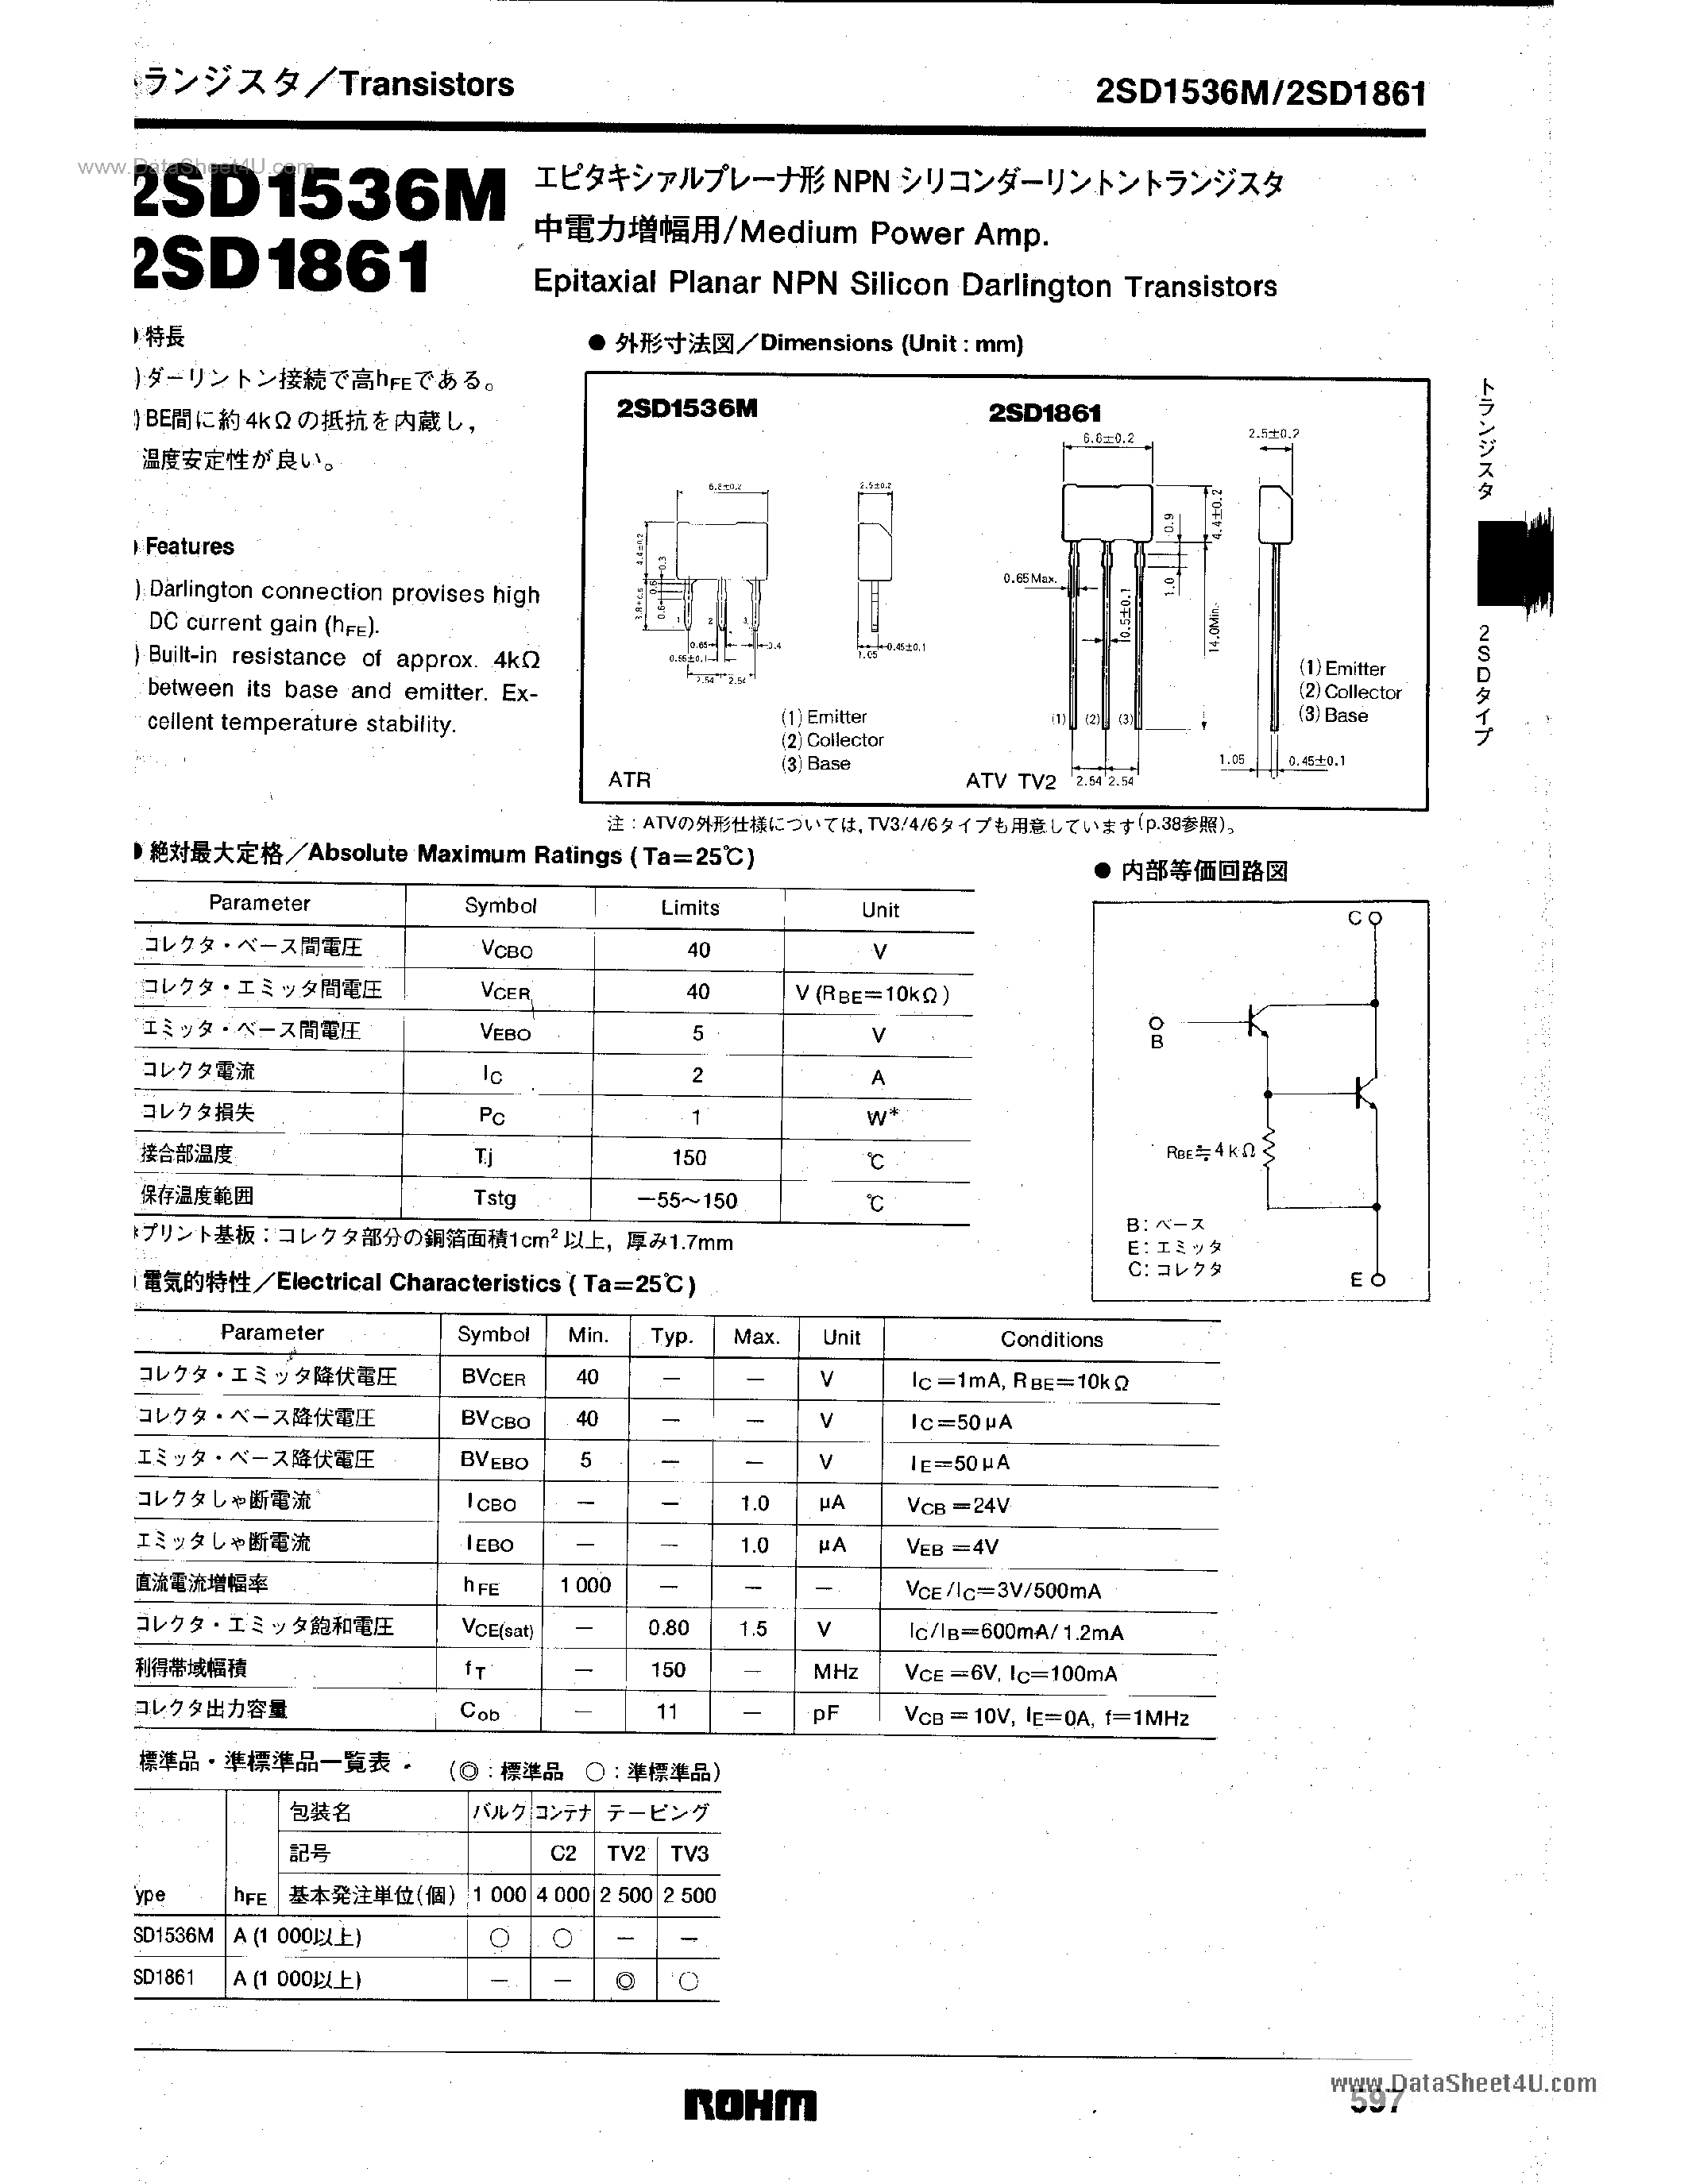 Datasheet 2SD1536M - (2SD1536M / 2SD1861) Epitaxial Planar NPN Silicon Darlington Transistors page 1